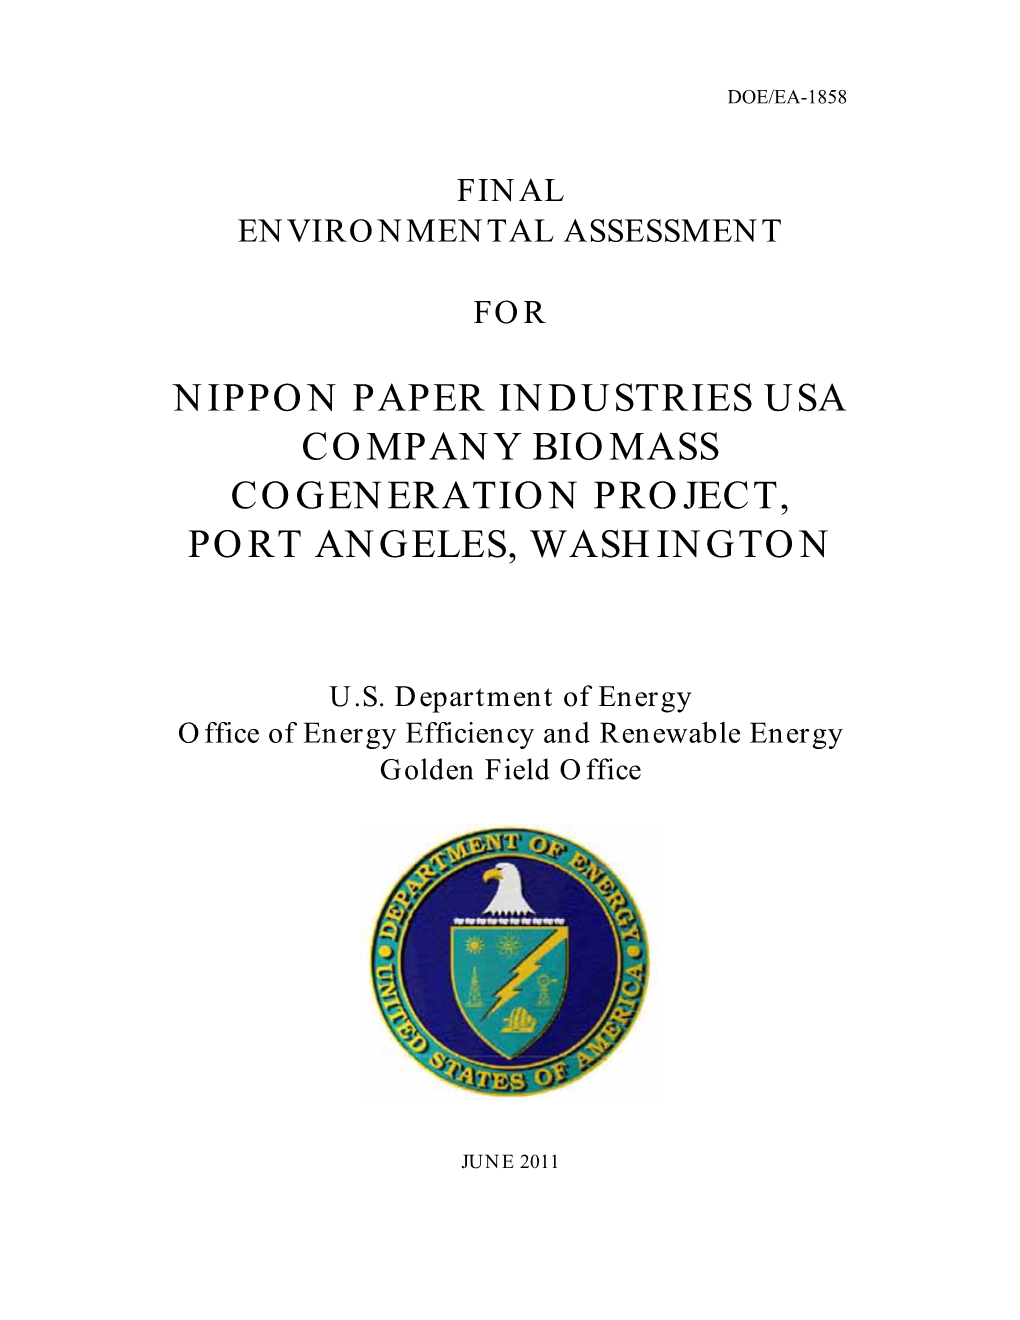 Nippon Paper Industries Usa Company Biomass Cogeneration Project, Port Angeles, Washington